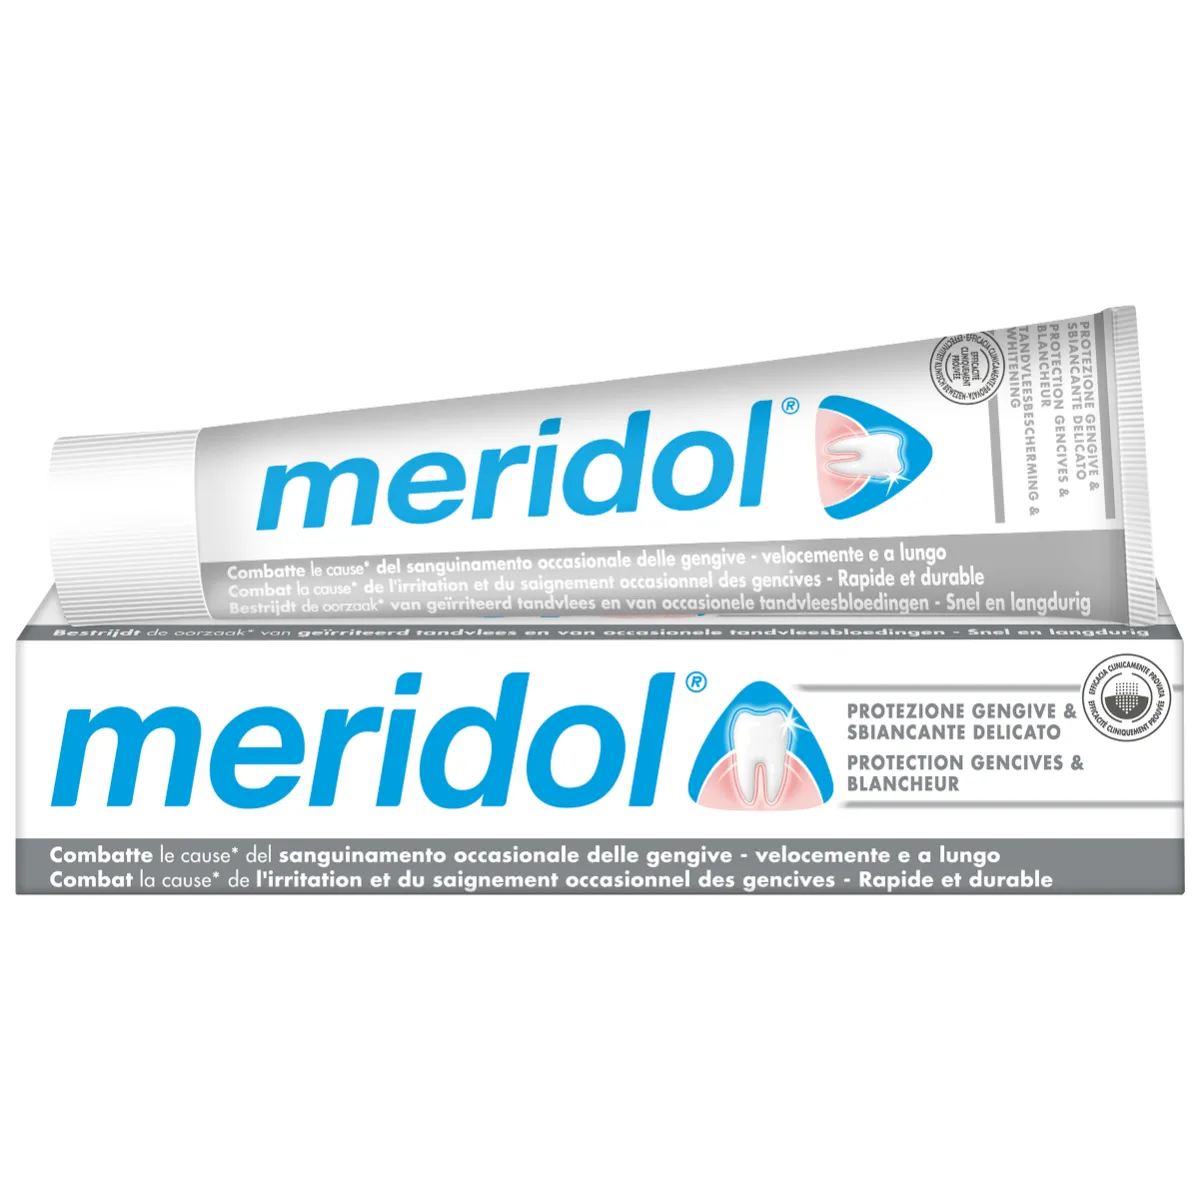 Meridol Whitening Dentifricio Sbiancante 75 ml Protezione Gengive